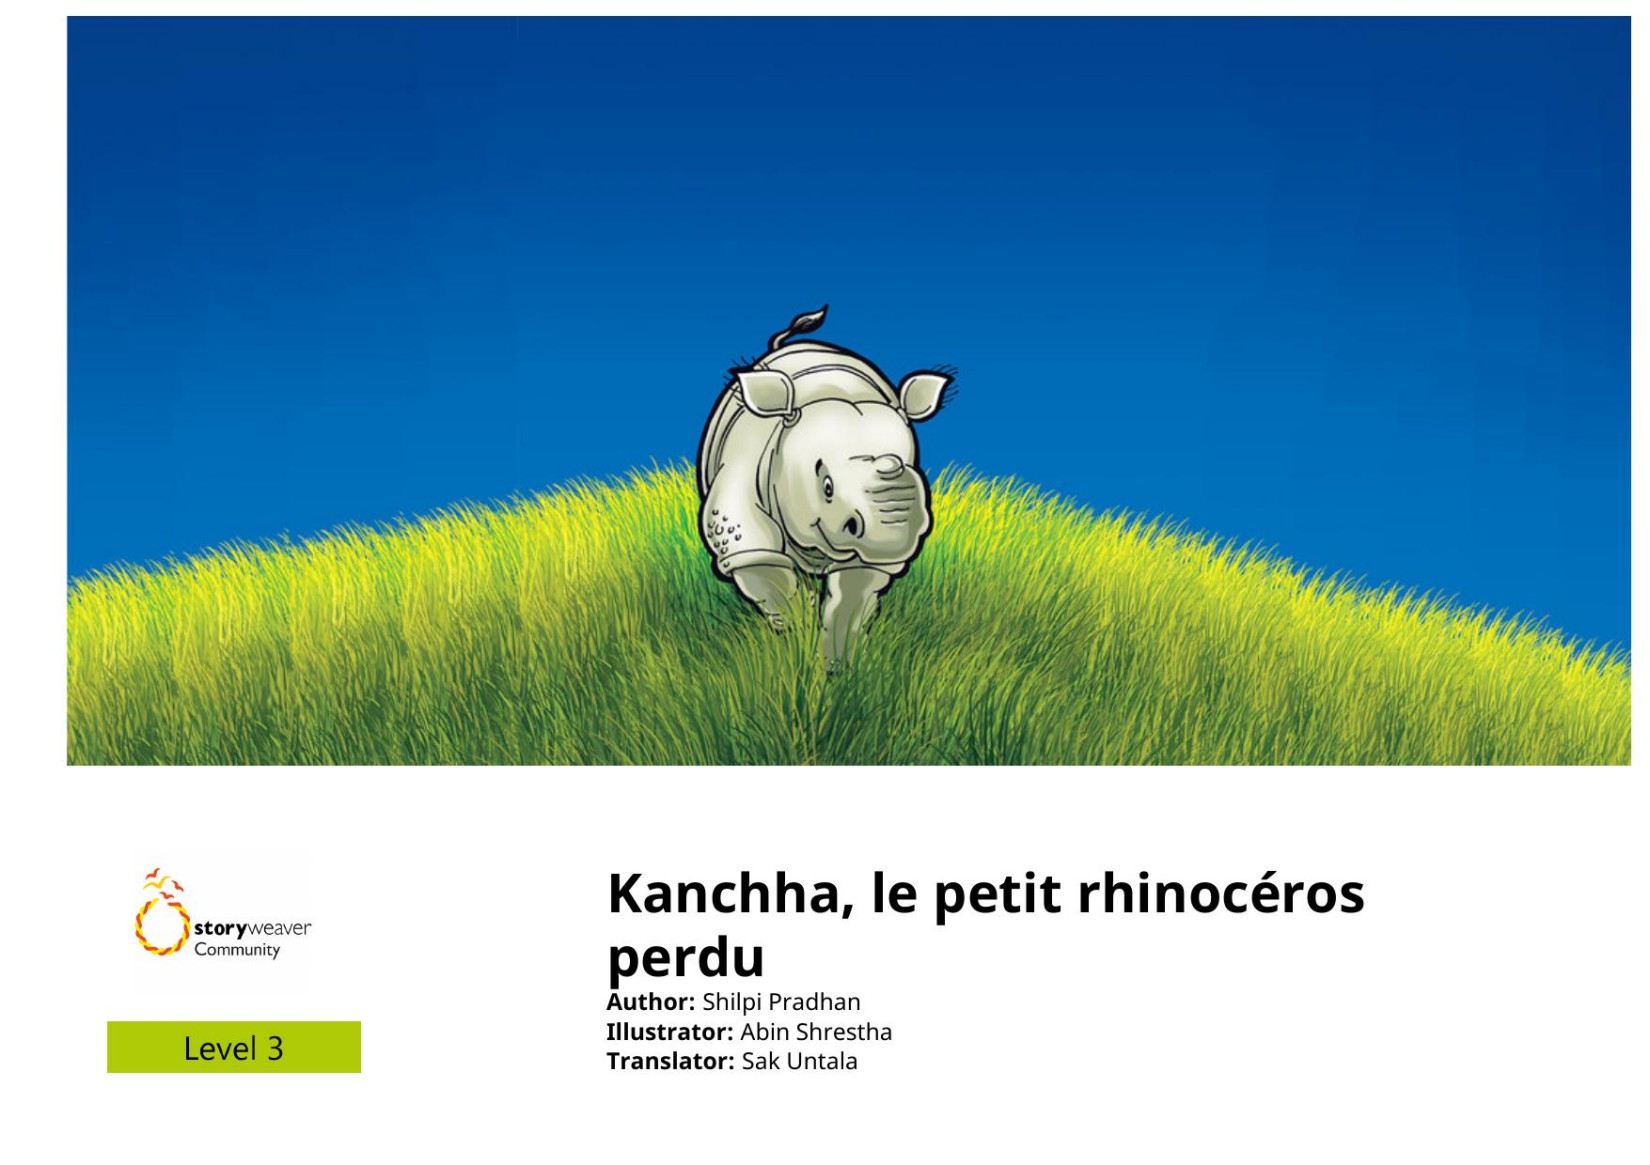 Kanchha, le petit rhinocéros perdu